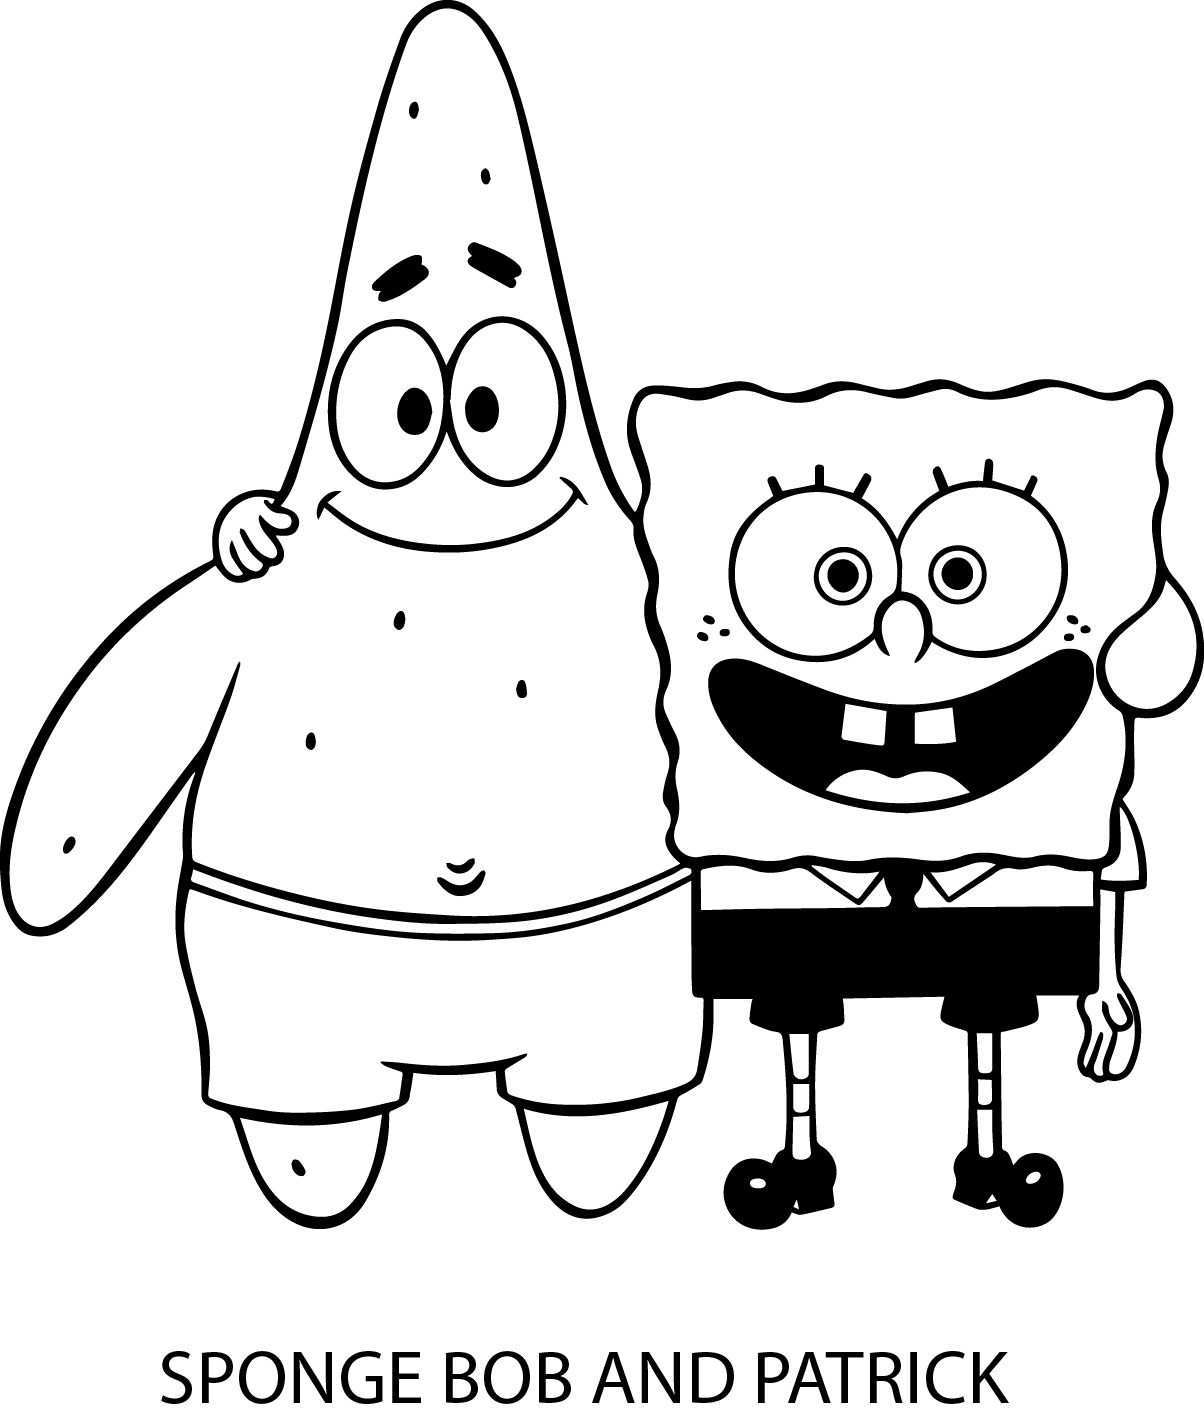 Spongebob And Patrick Coloring Page Printable Spongebob Drawings Spongebob Coloring C